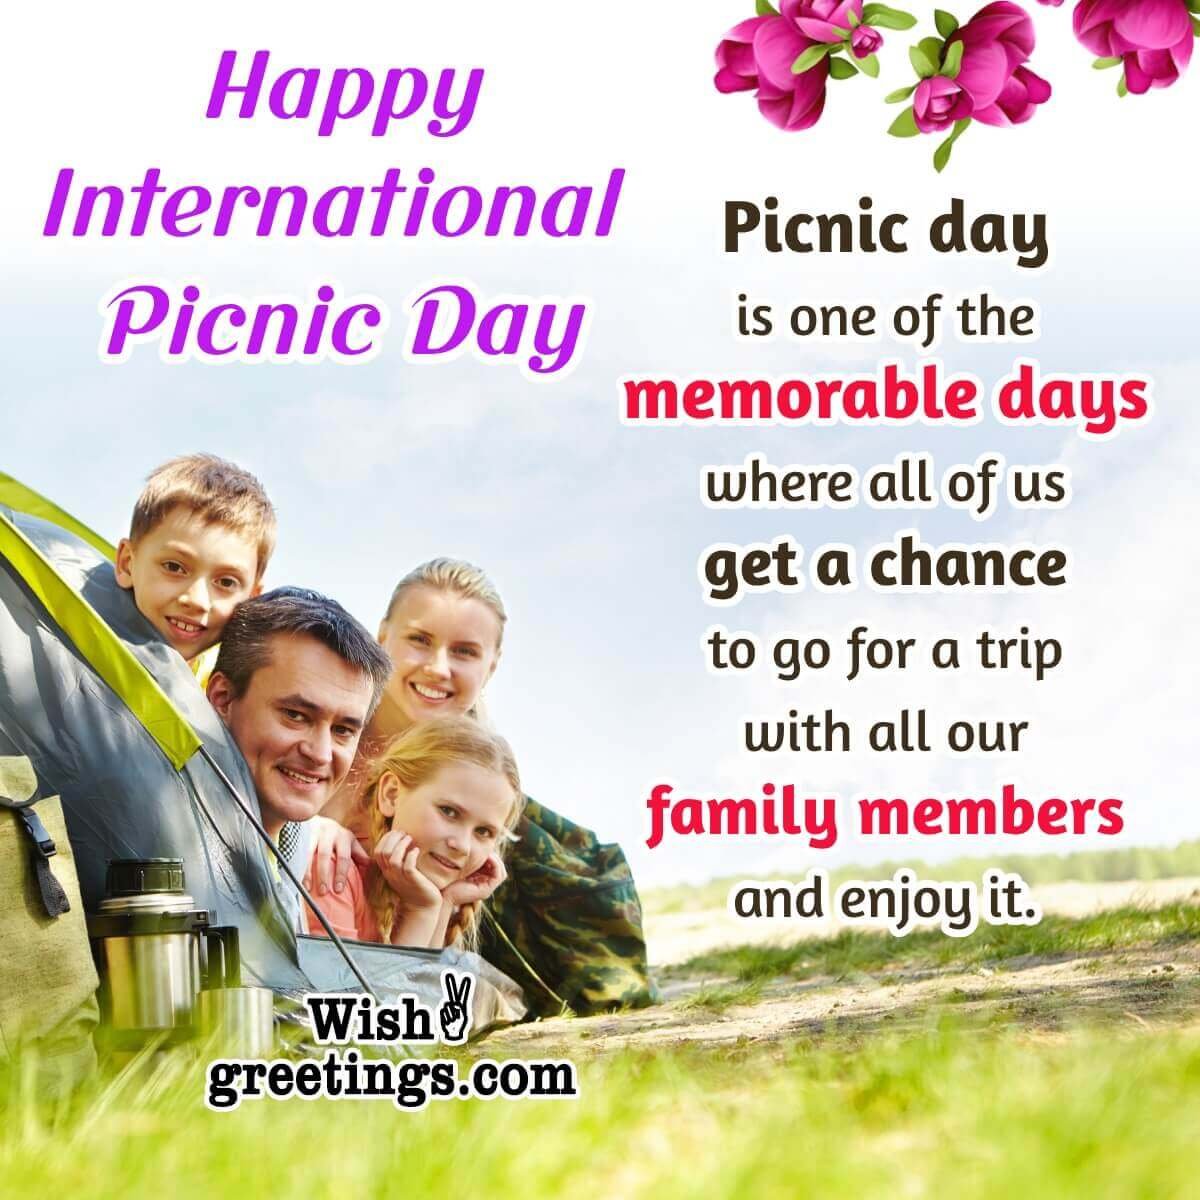 Happy International Picnic Day Message Photo